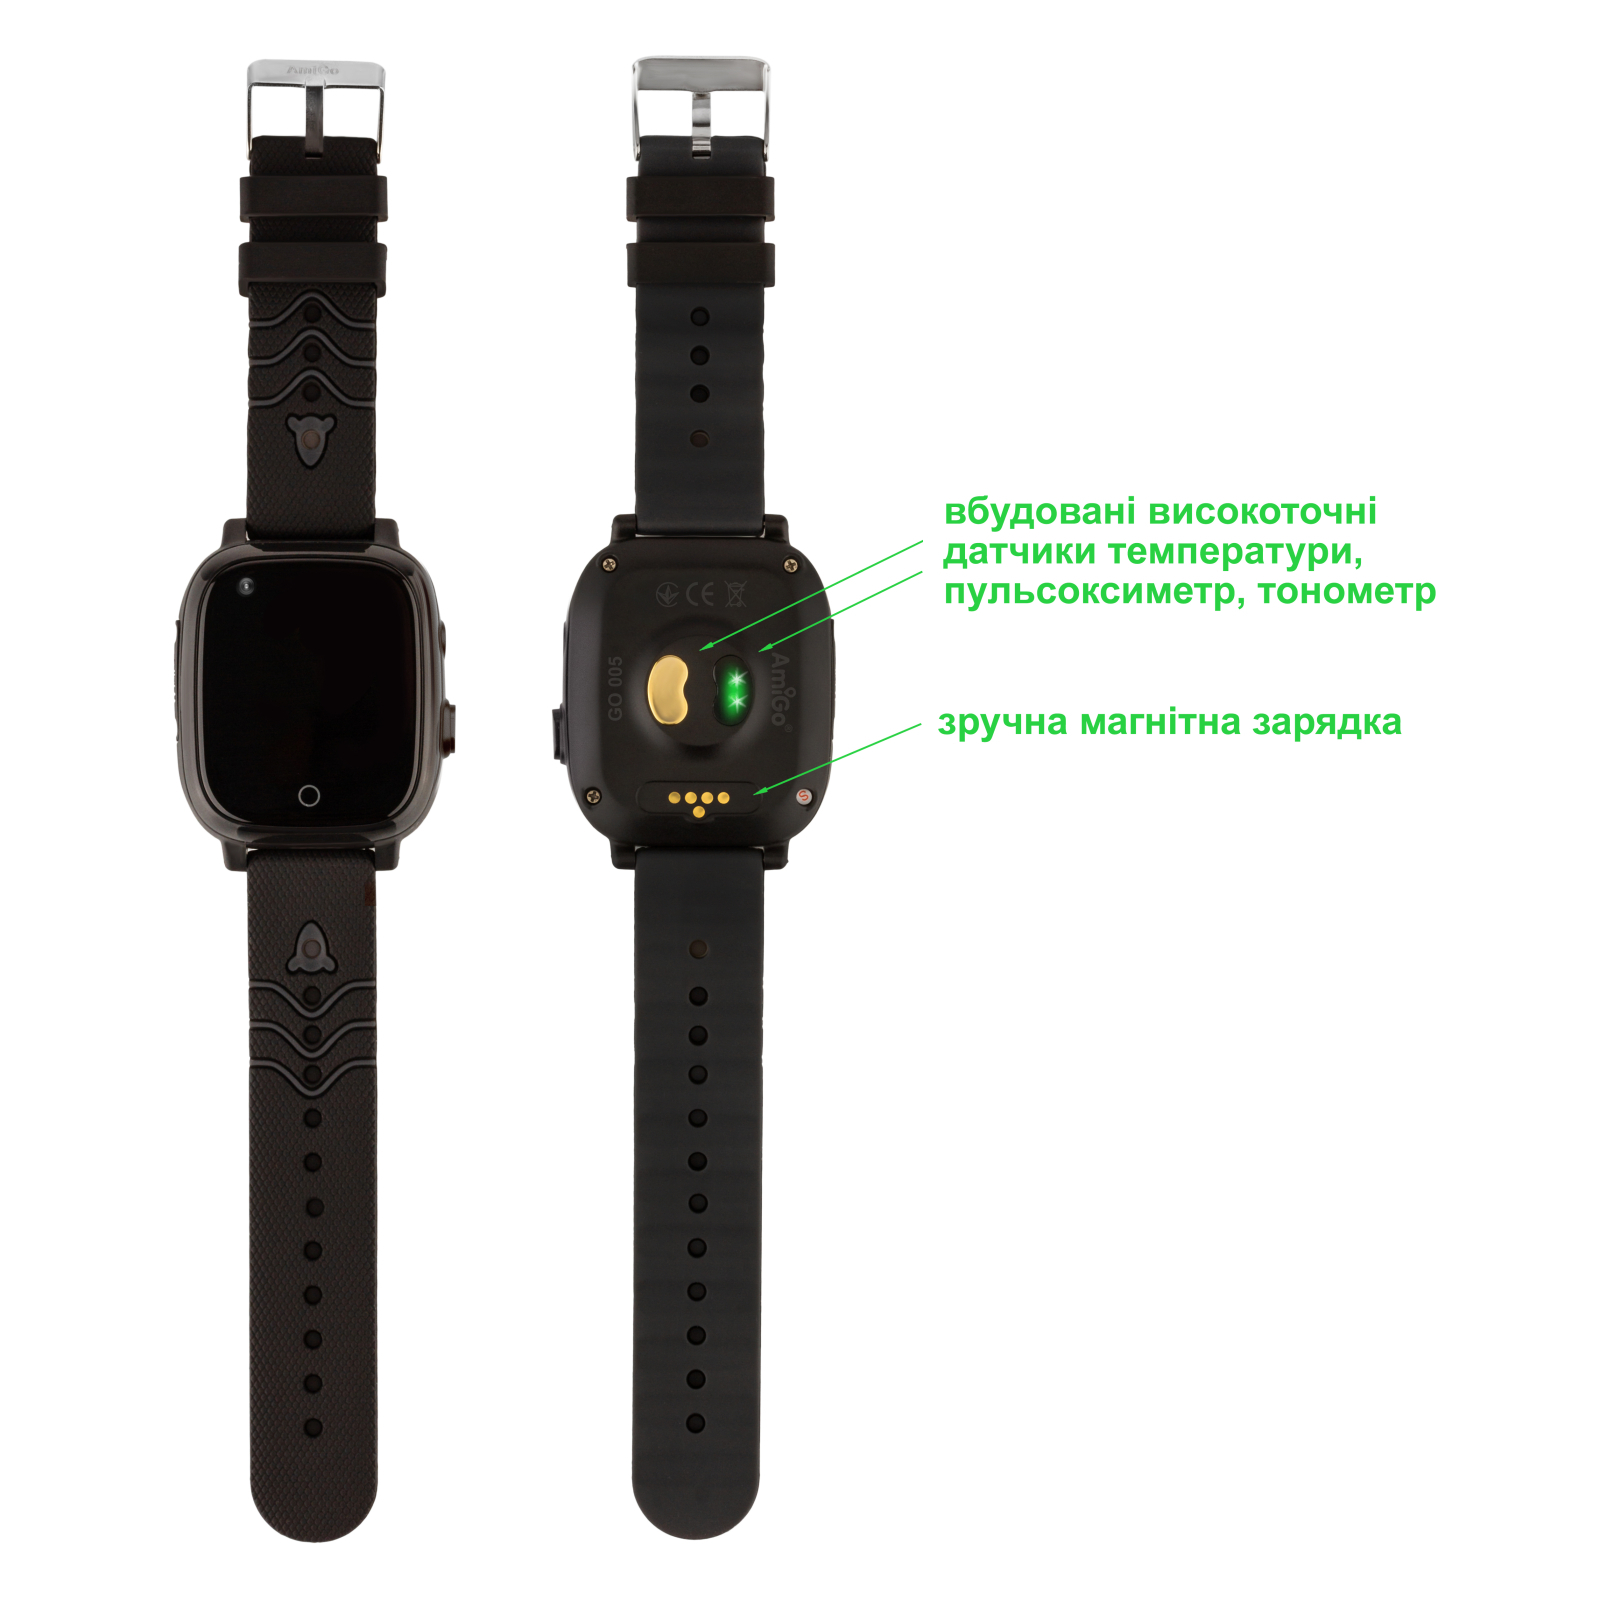 Смарт-часы Amigo GO005 4G WIFI Kids waterproof Thermometer Pink (747018) изображение 5